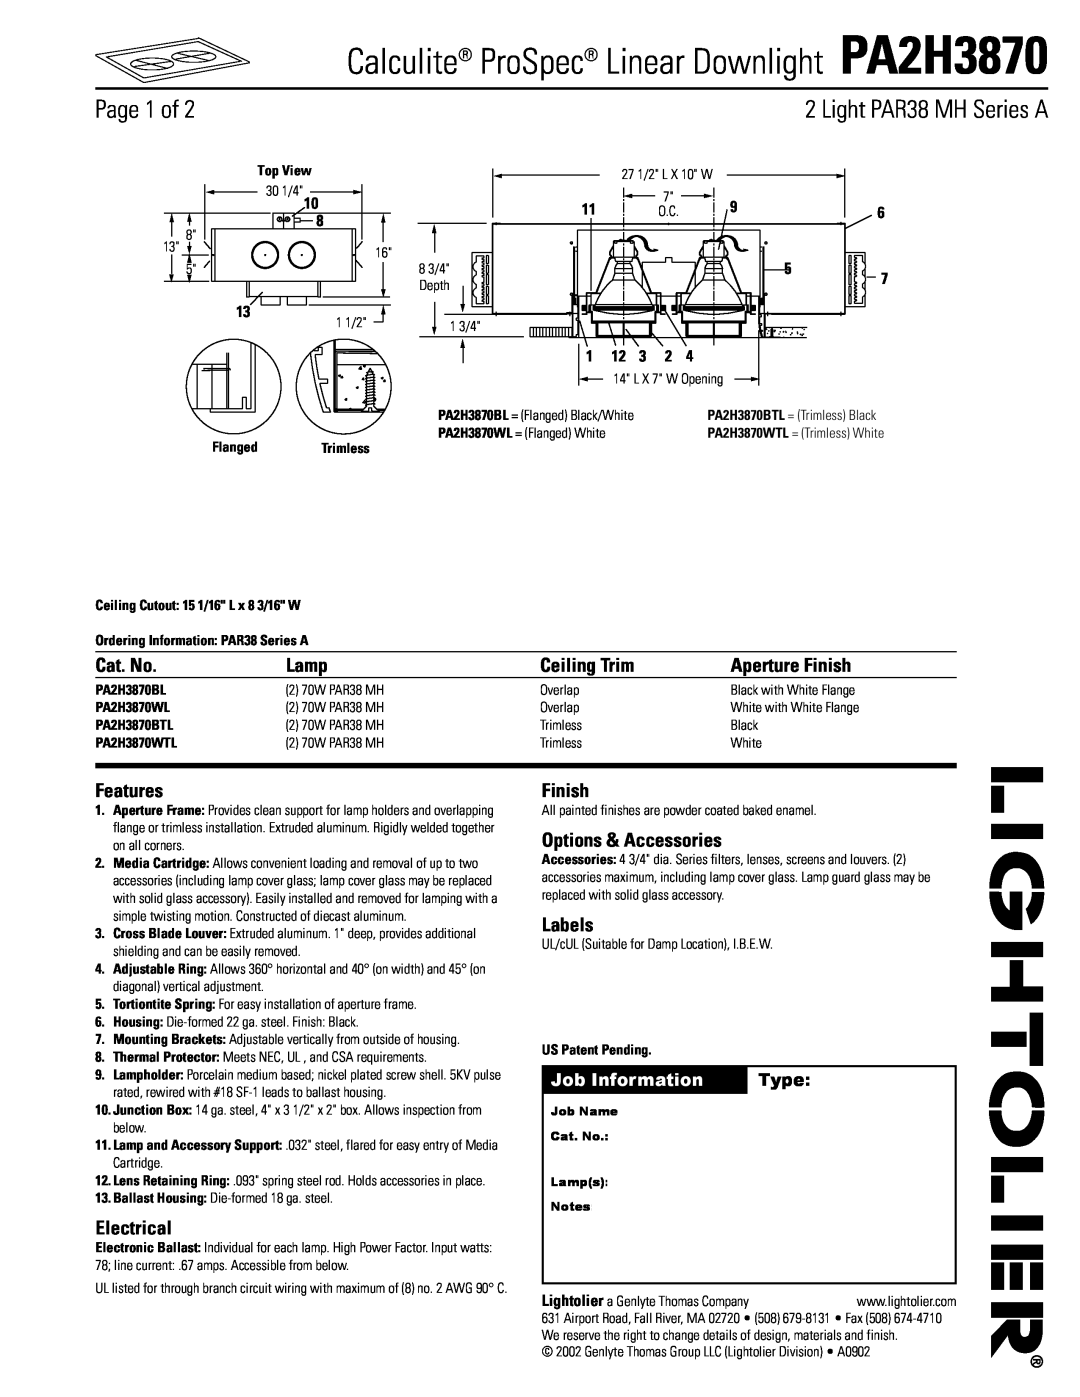 Lightolier PA2H3870 manual Light PAR38 MH Series A, Page 1 of, Cat. No, Lamp, Ceiling Trim, Aperture Finish, Features 